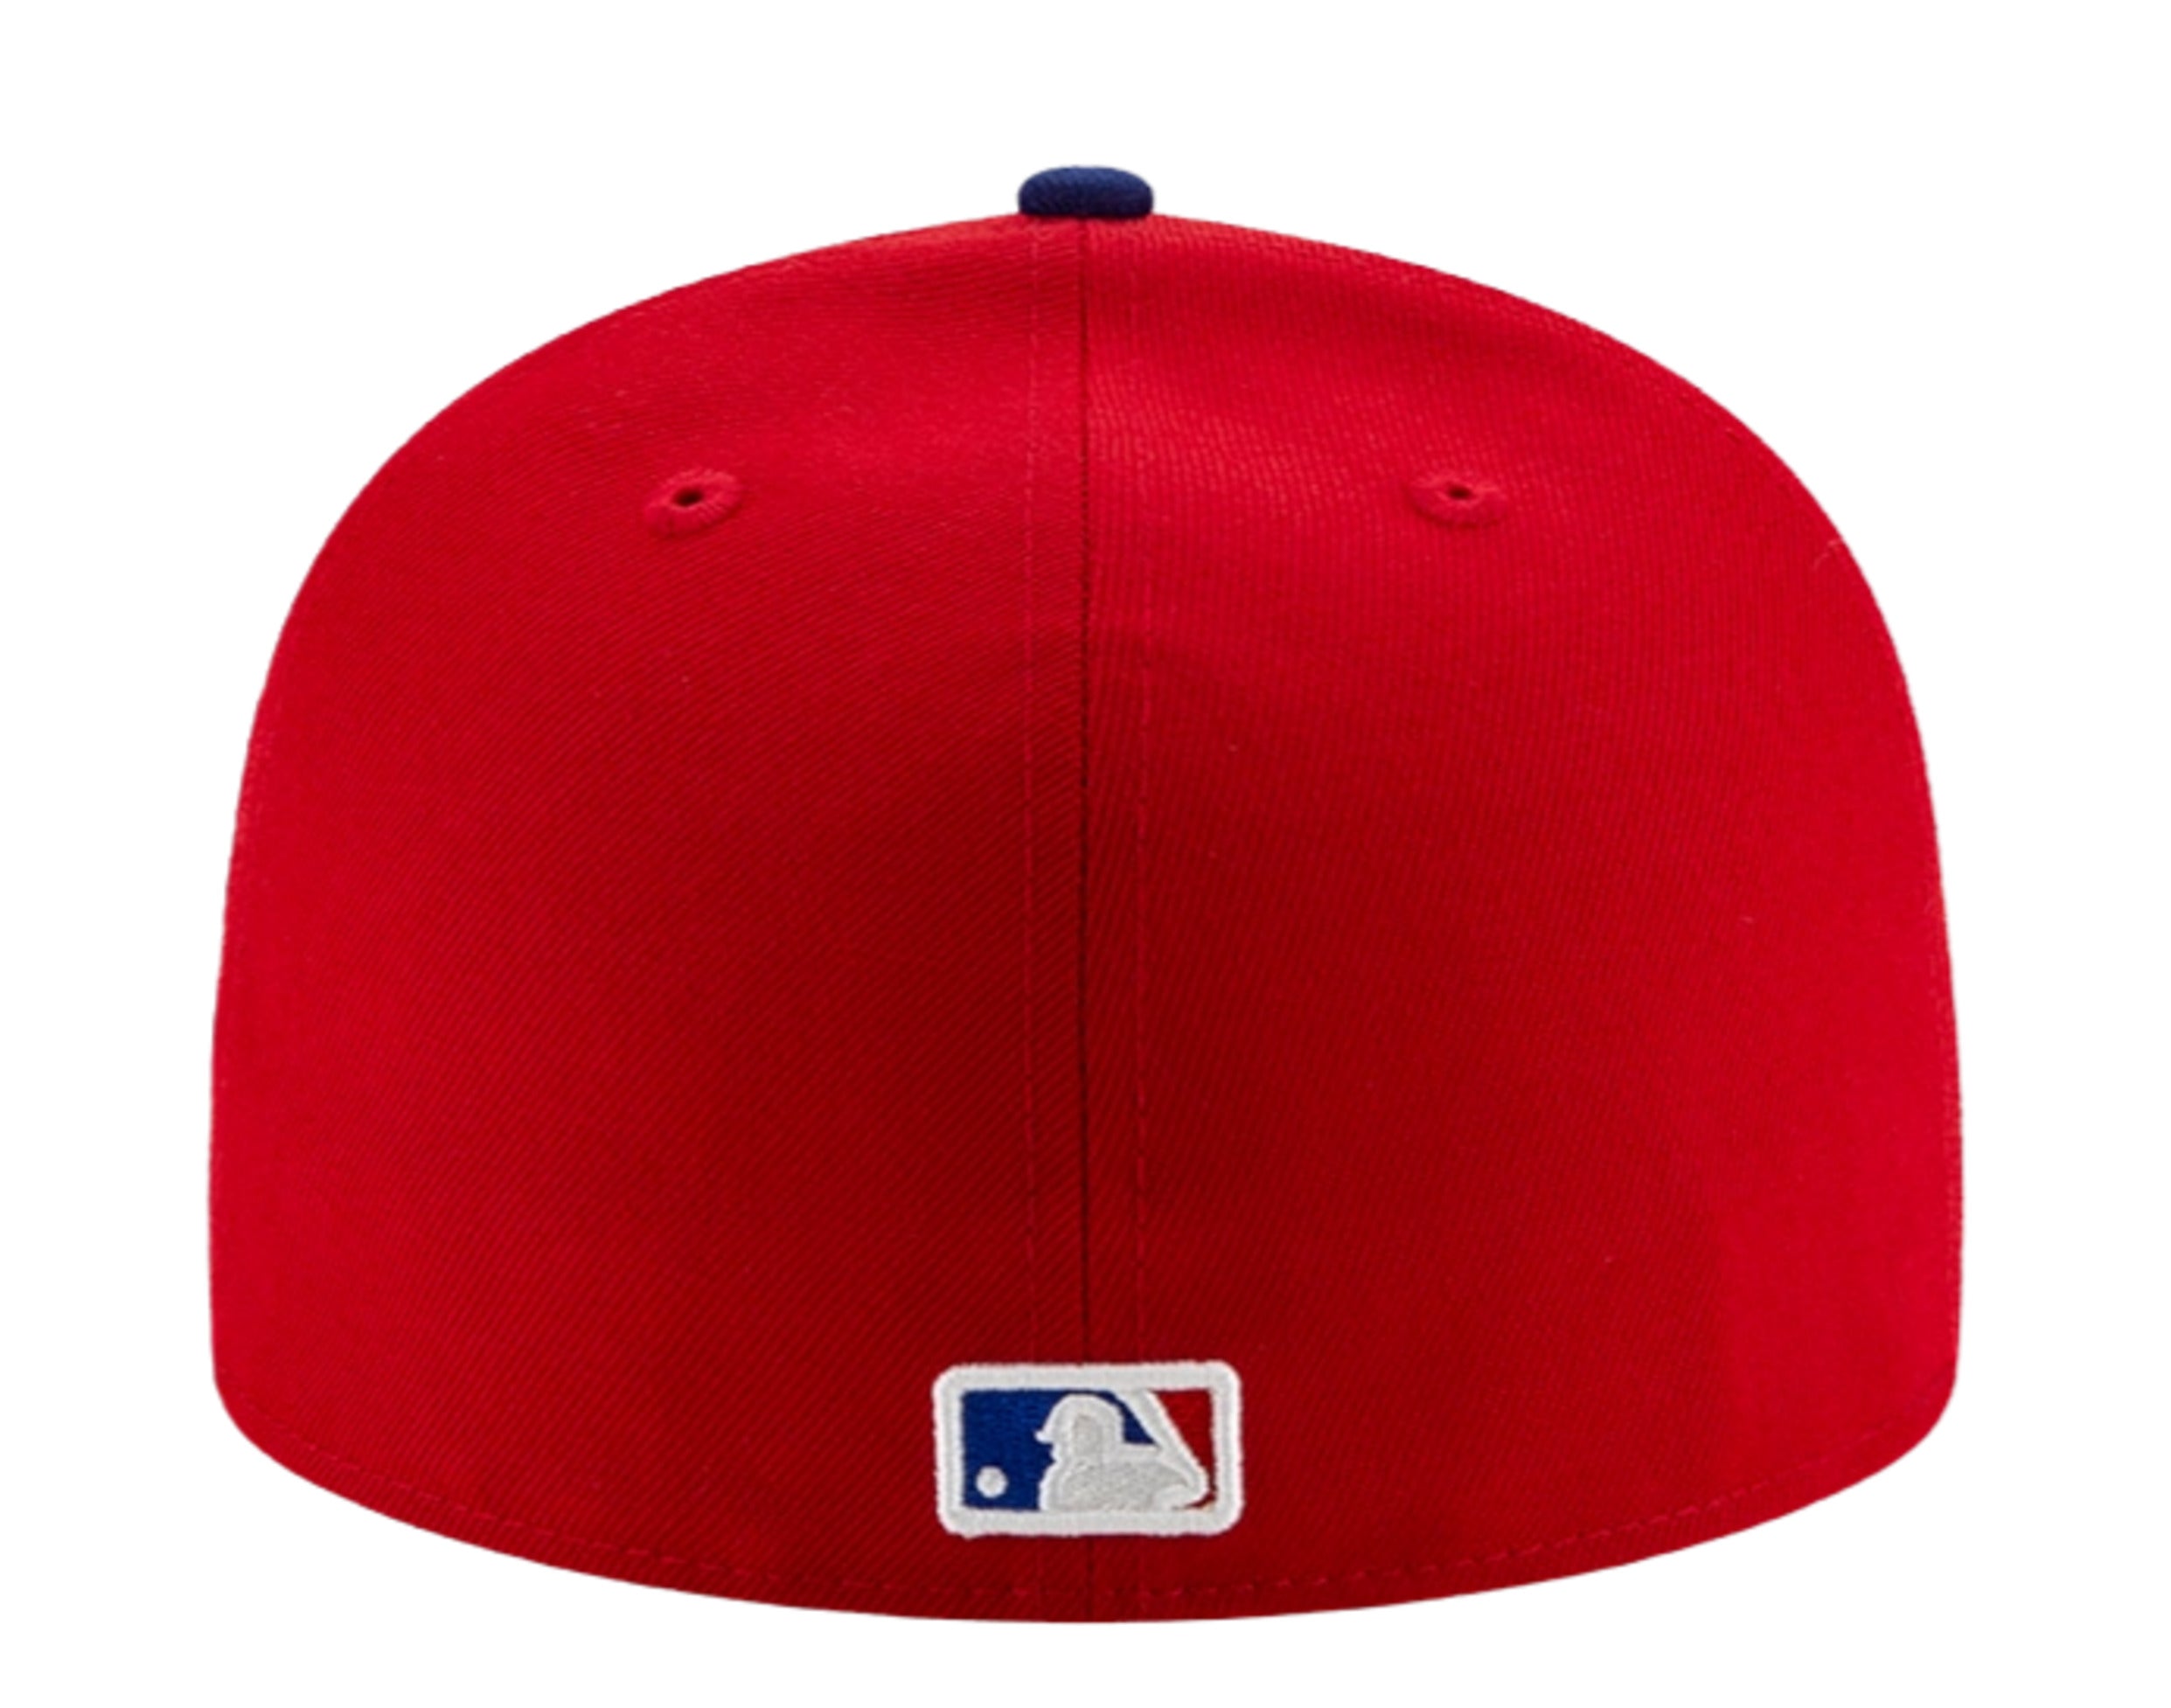 New Era Texas Rangers Cream Chrome Team Classic 39THIRTY Flex Hat